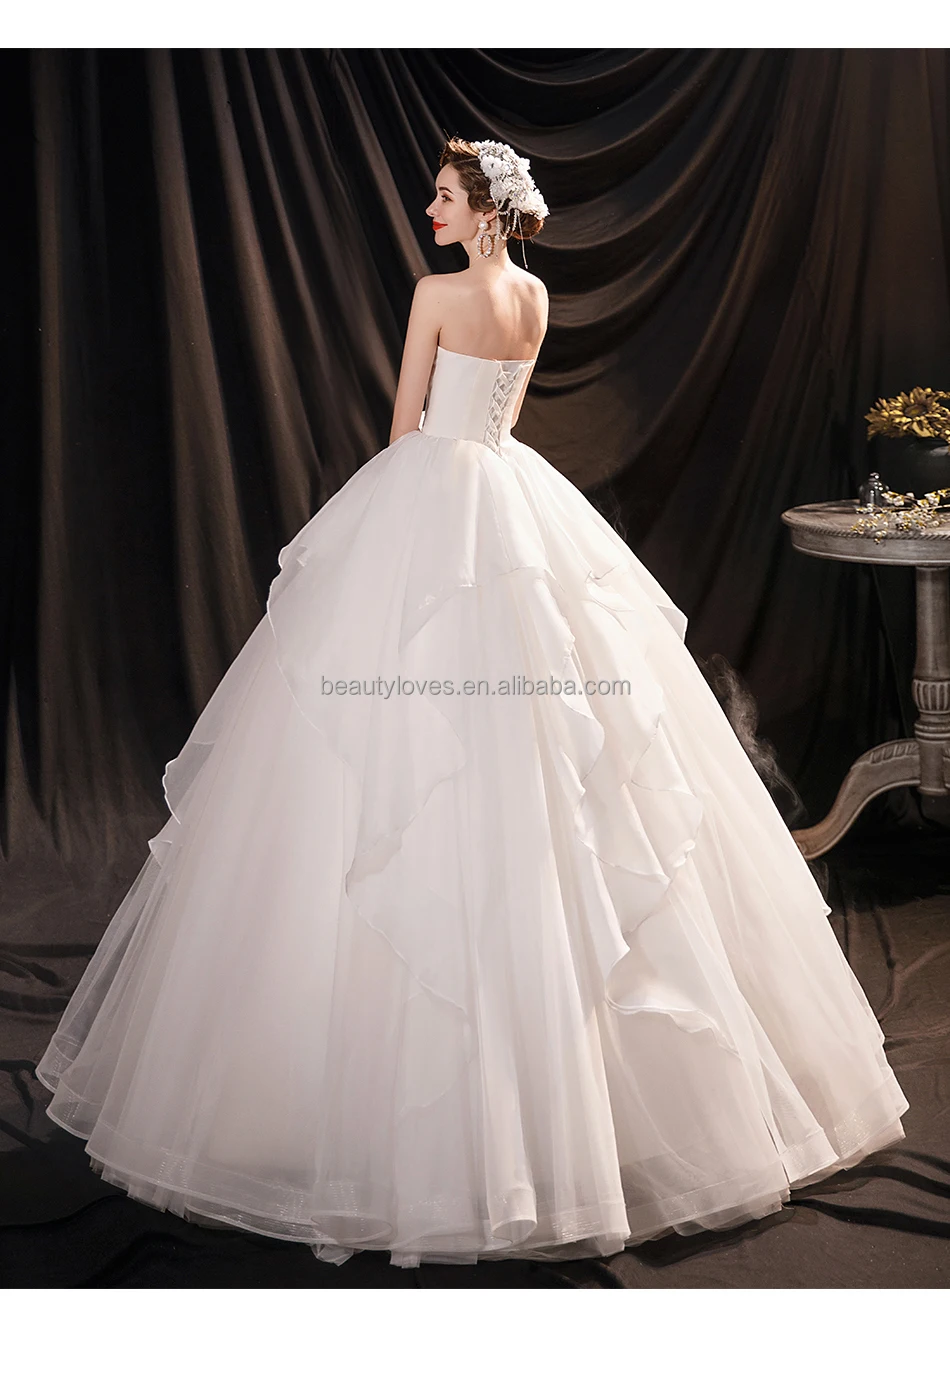 princess wedding dresses shiny beading crystal| Alibaba.com